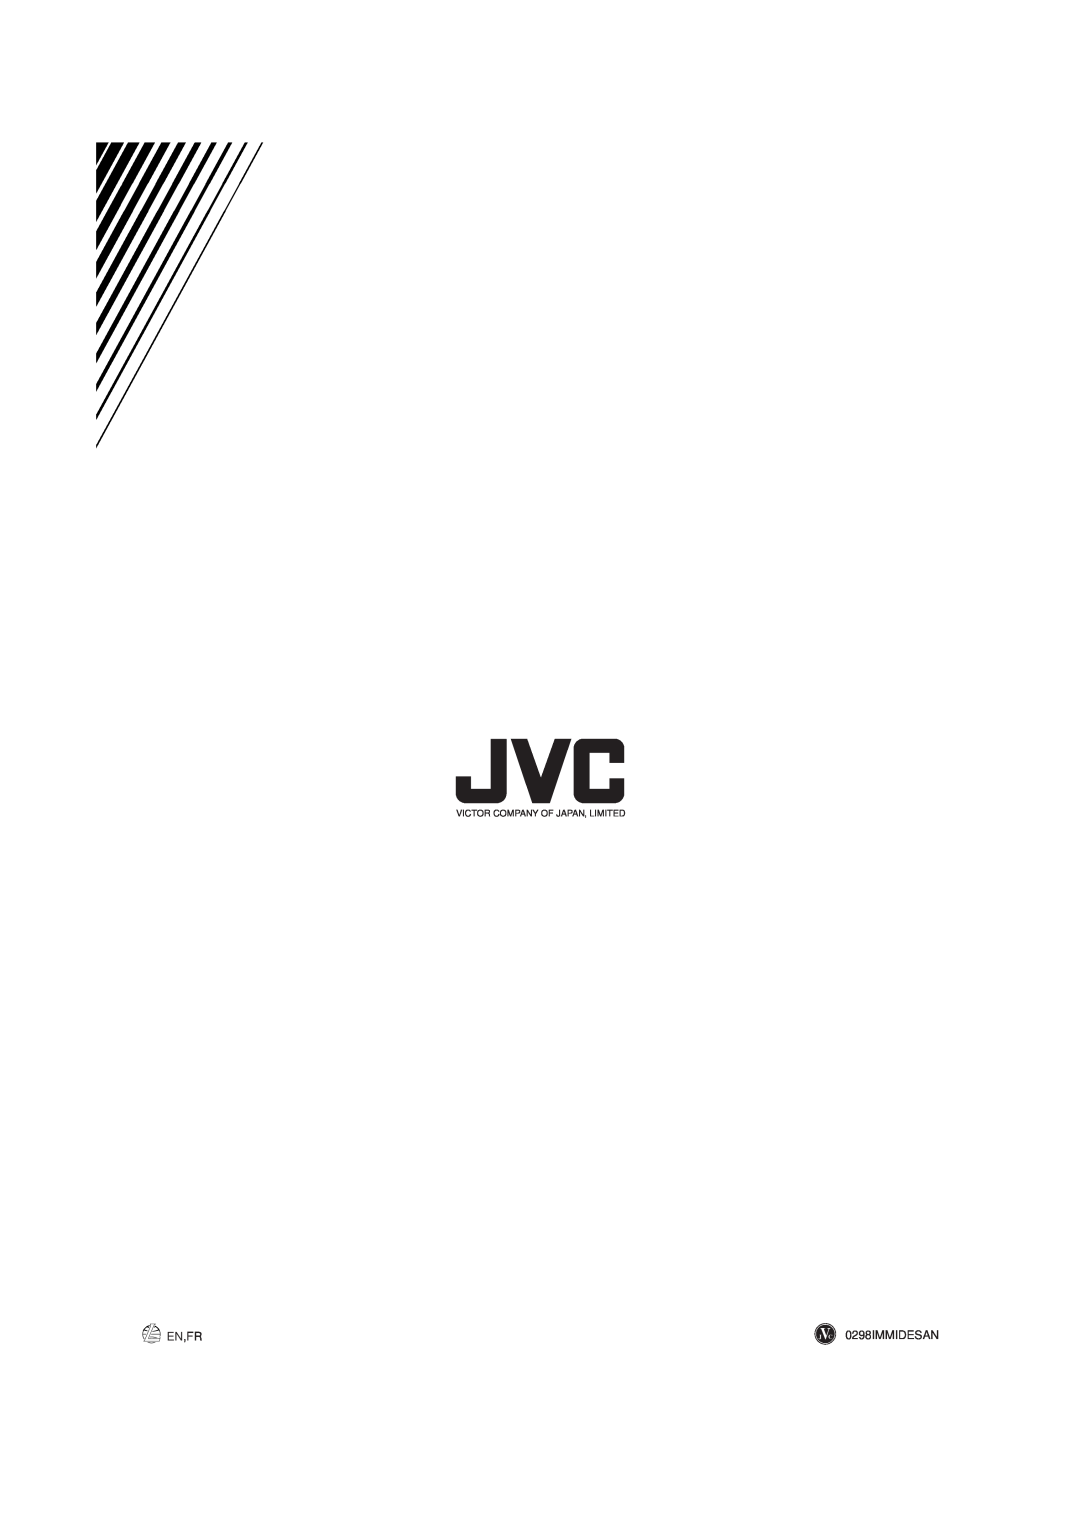 JVC XU-301BK manual En,Fr, JVC 0298IMMIDESAN, Victor Company Of Japan, Limited 